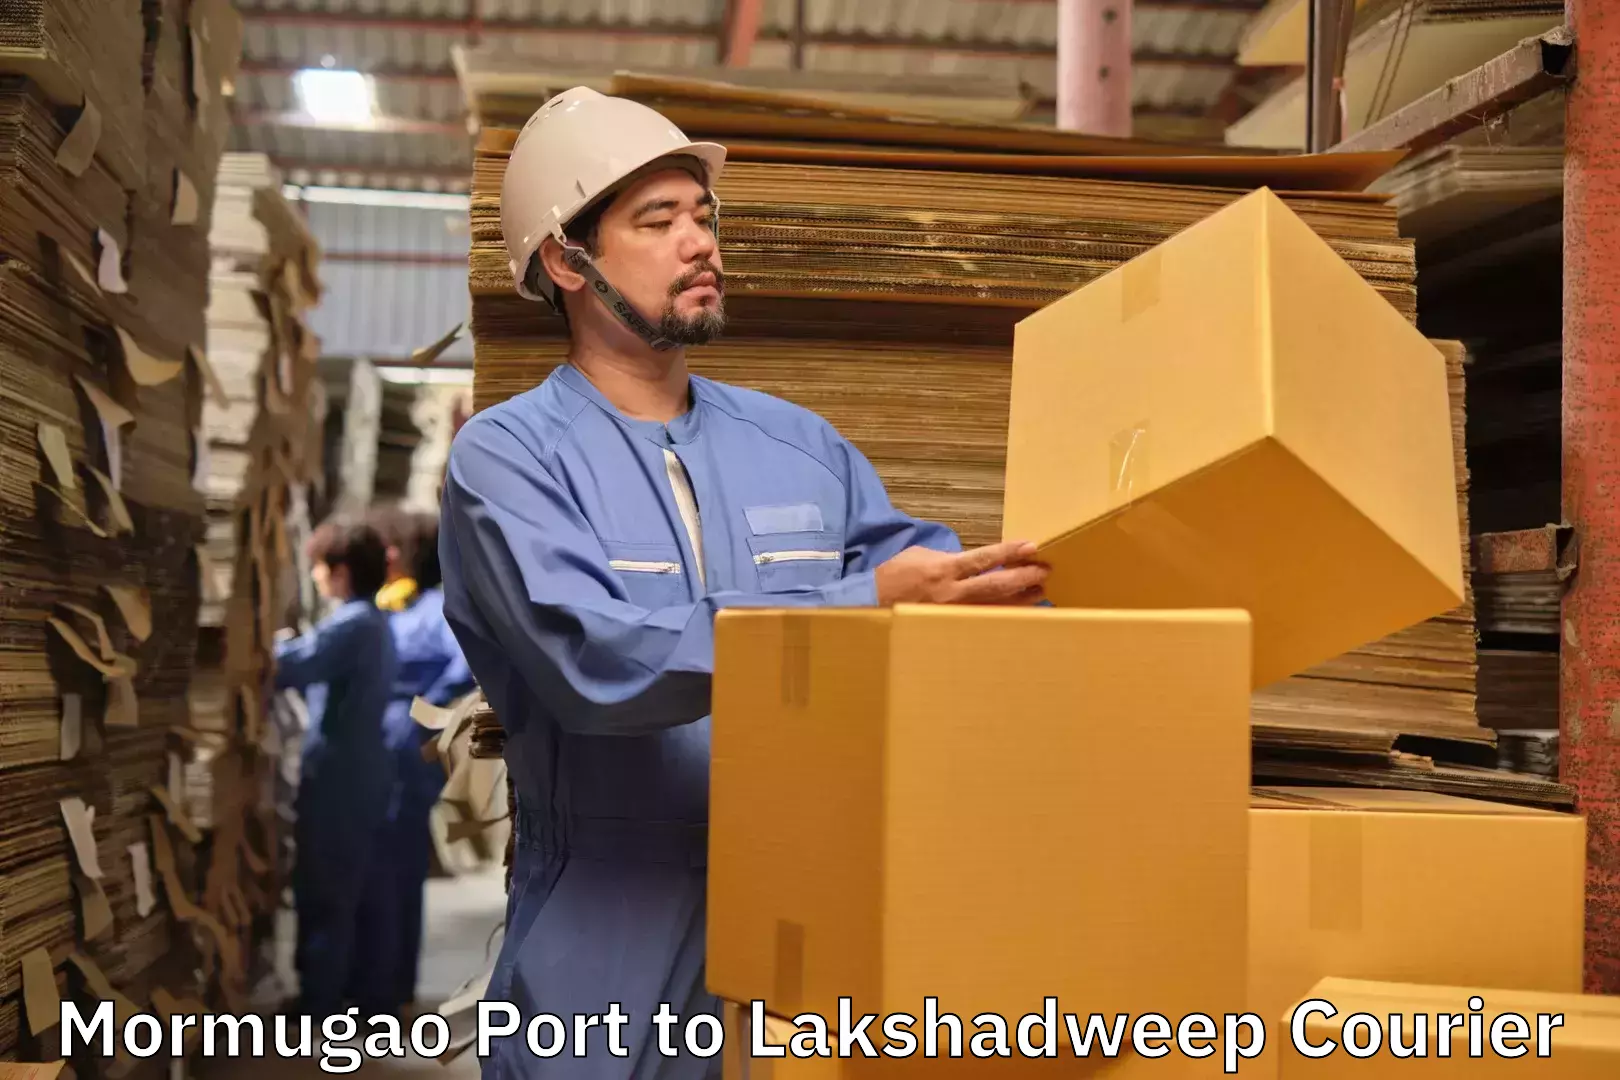 Door-to-door baggage service Mormugao Port to Lakshadweep